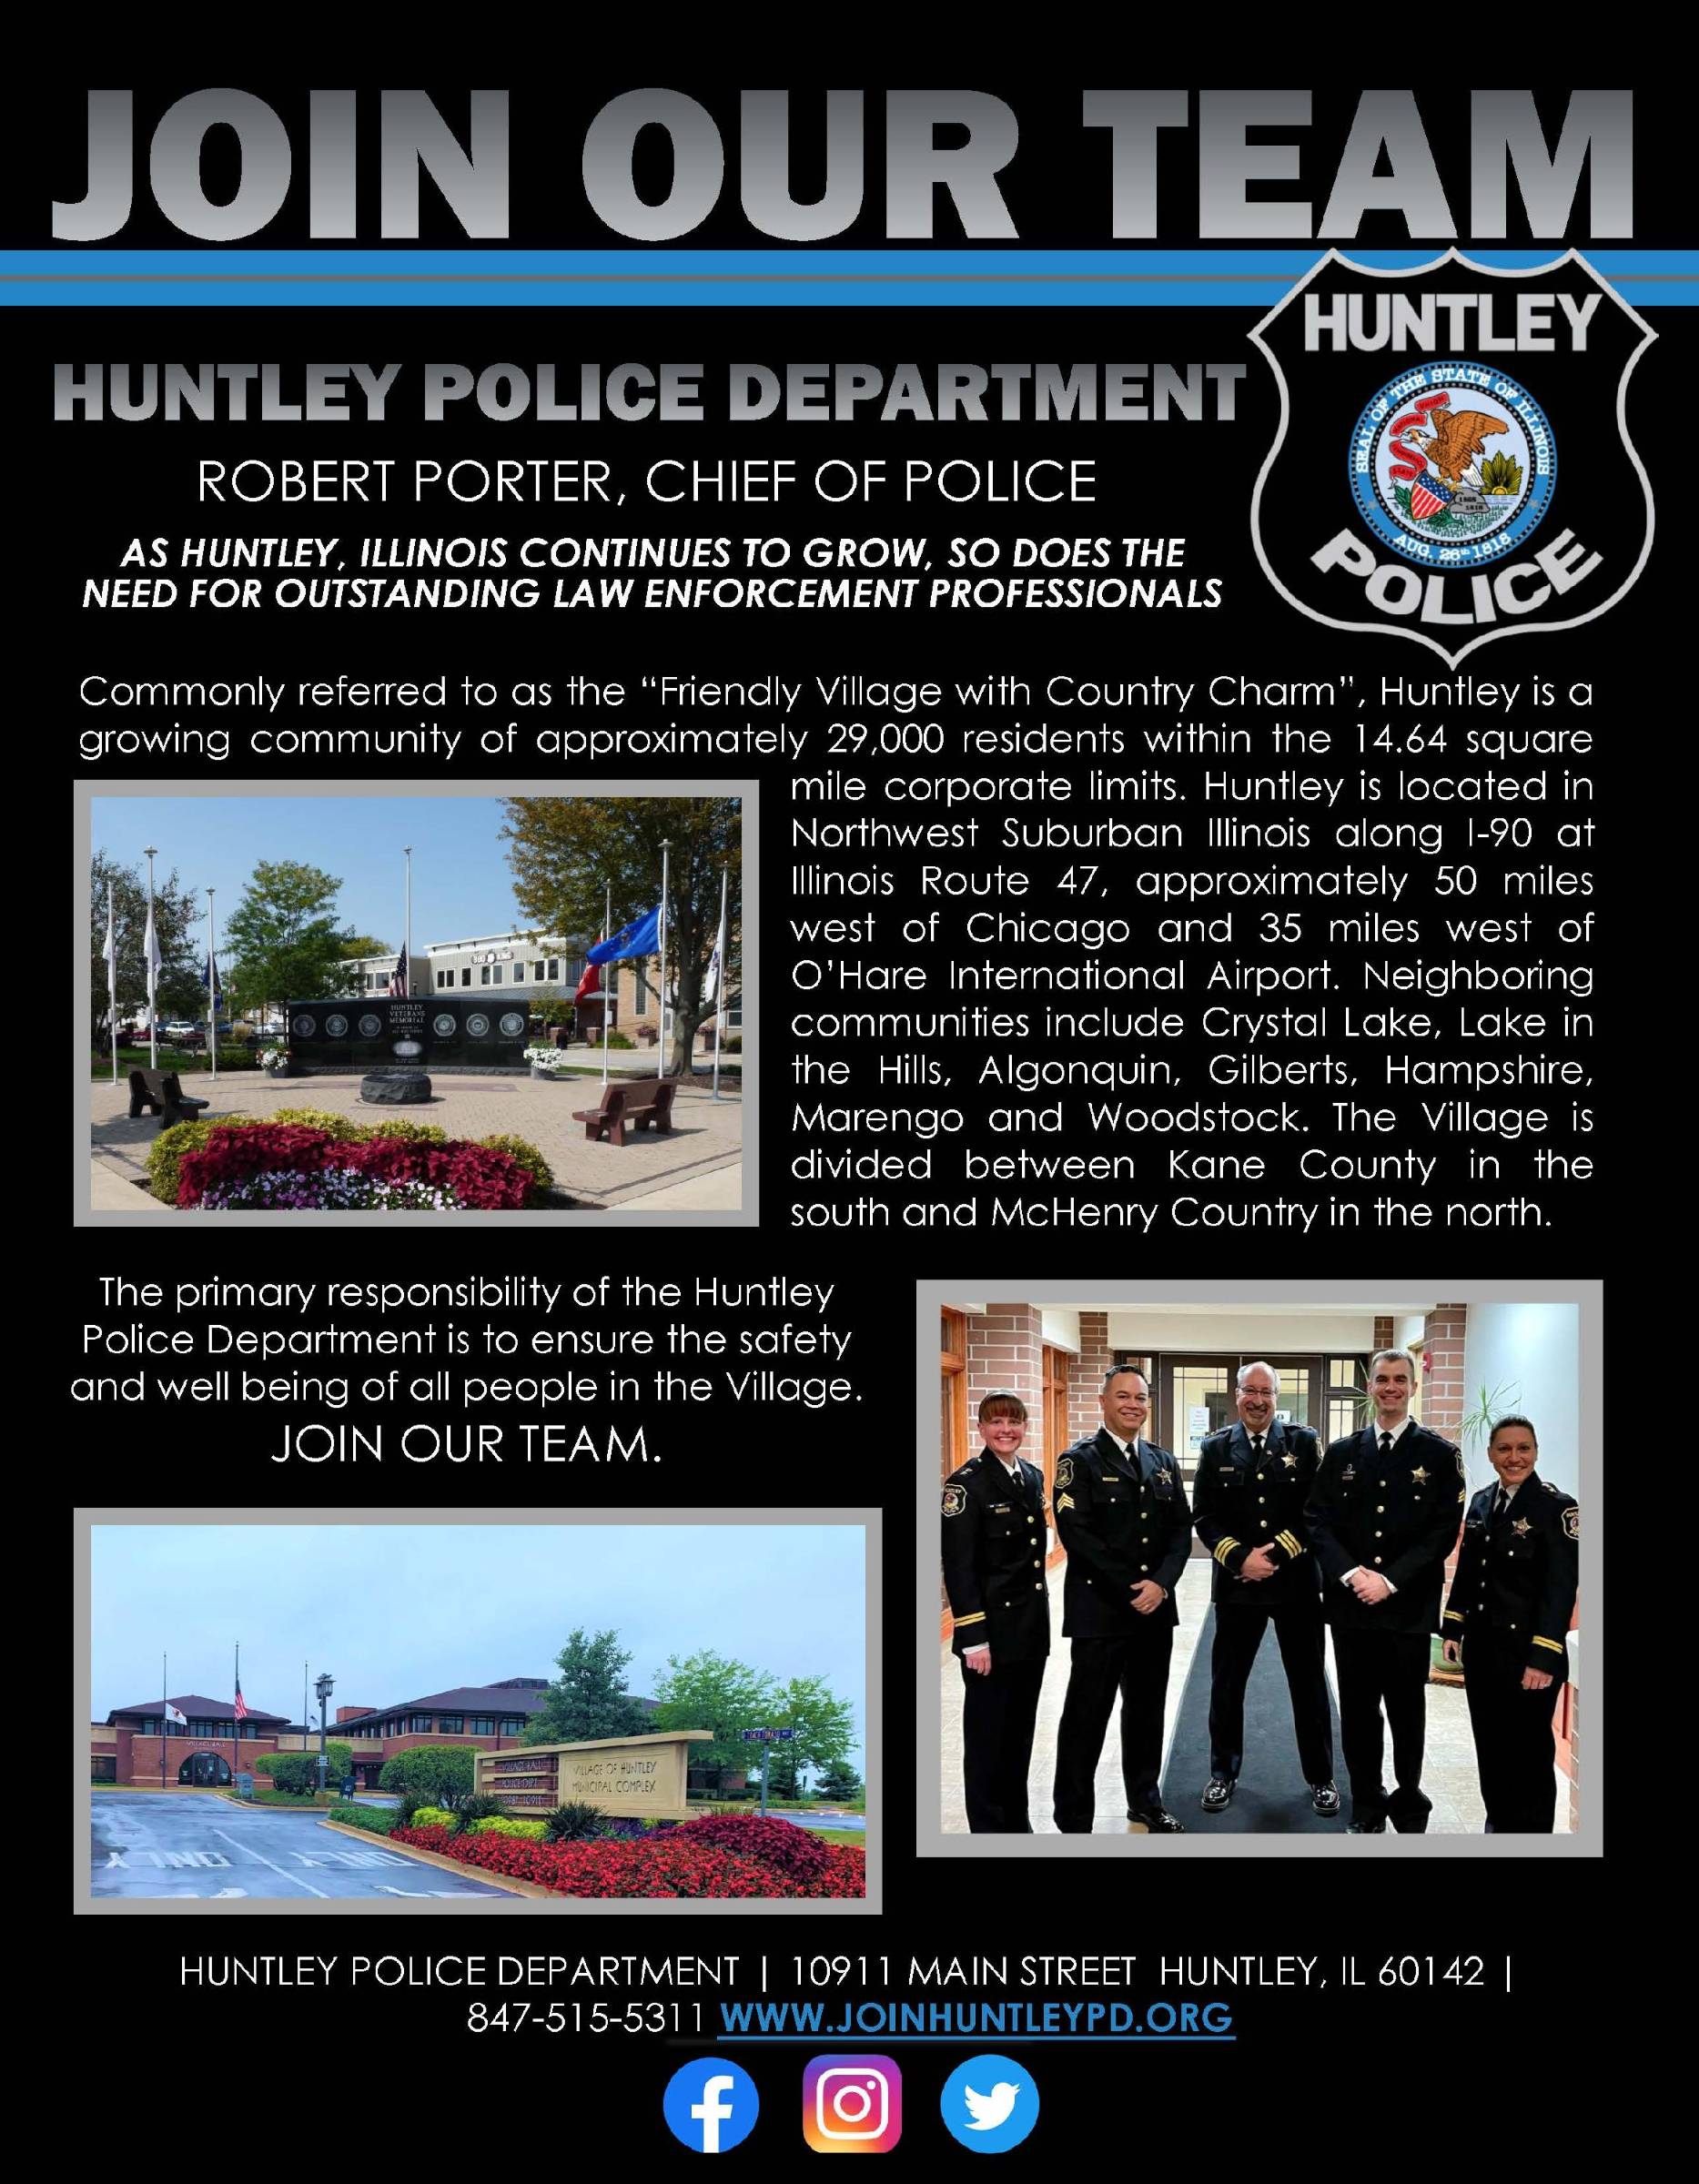 Huntley Police Brochure - images_Page_1 - Copy (2)